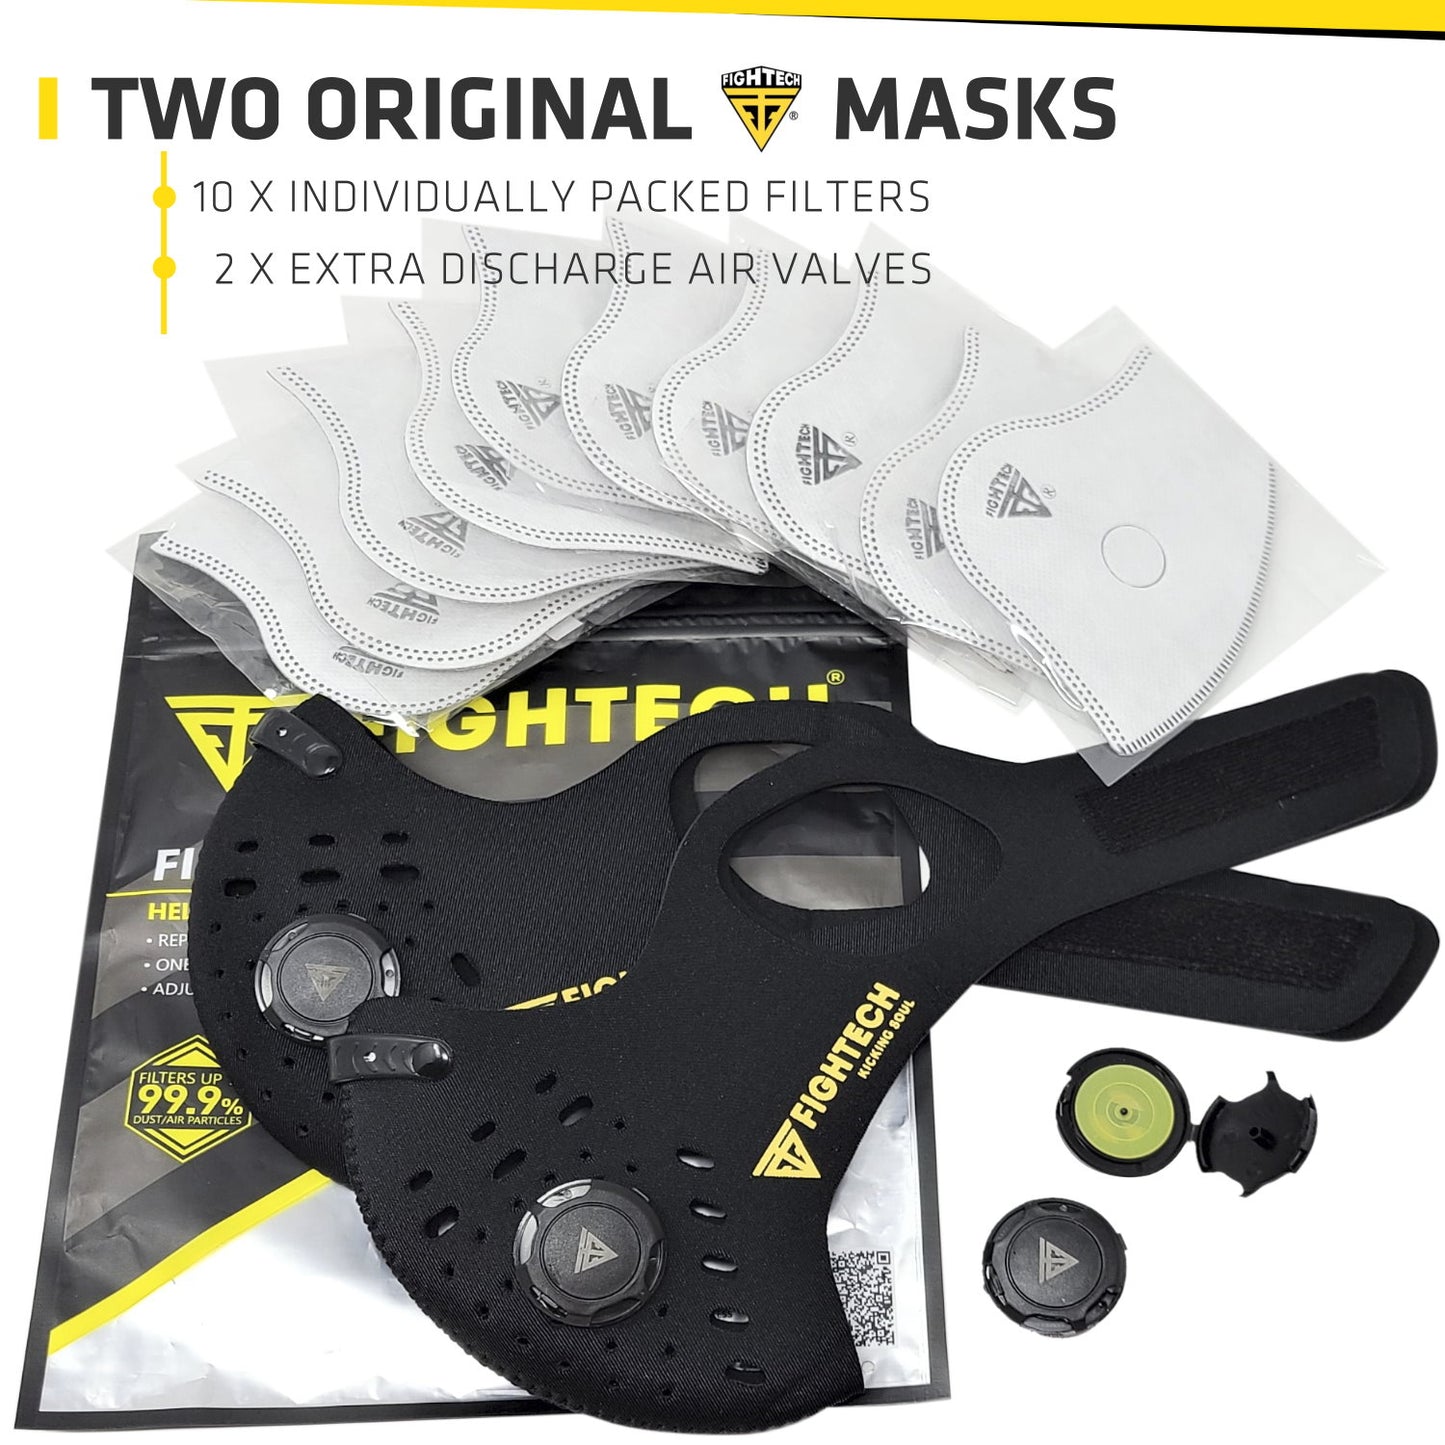 2 x FIGHTECH Neoprene Dust Masks